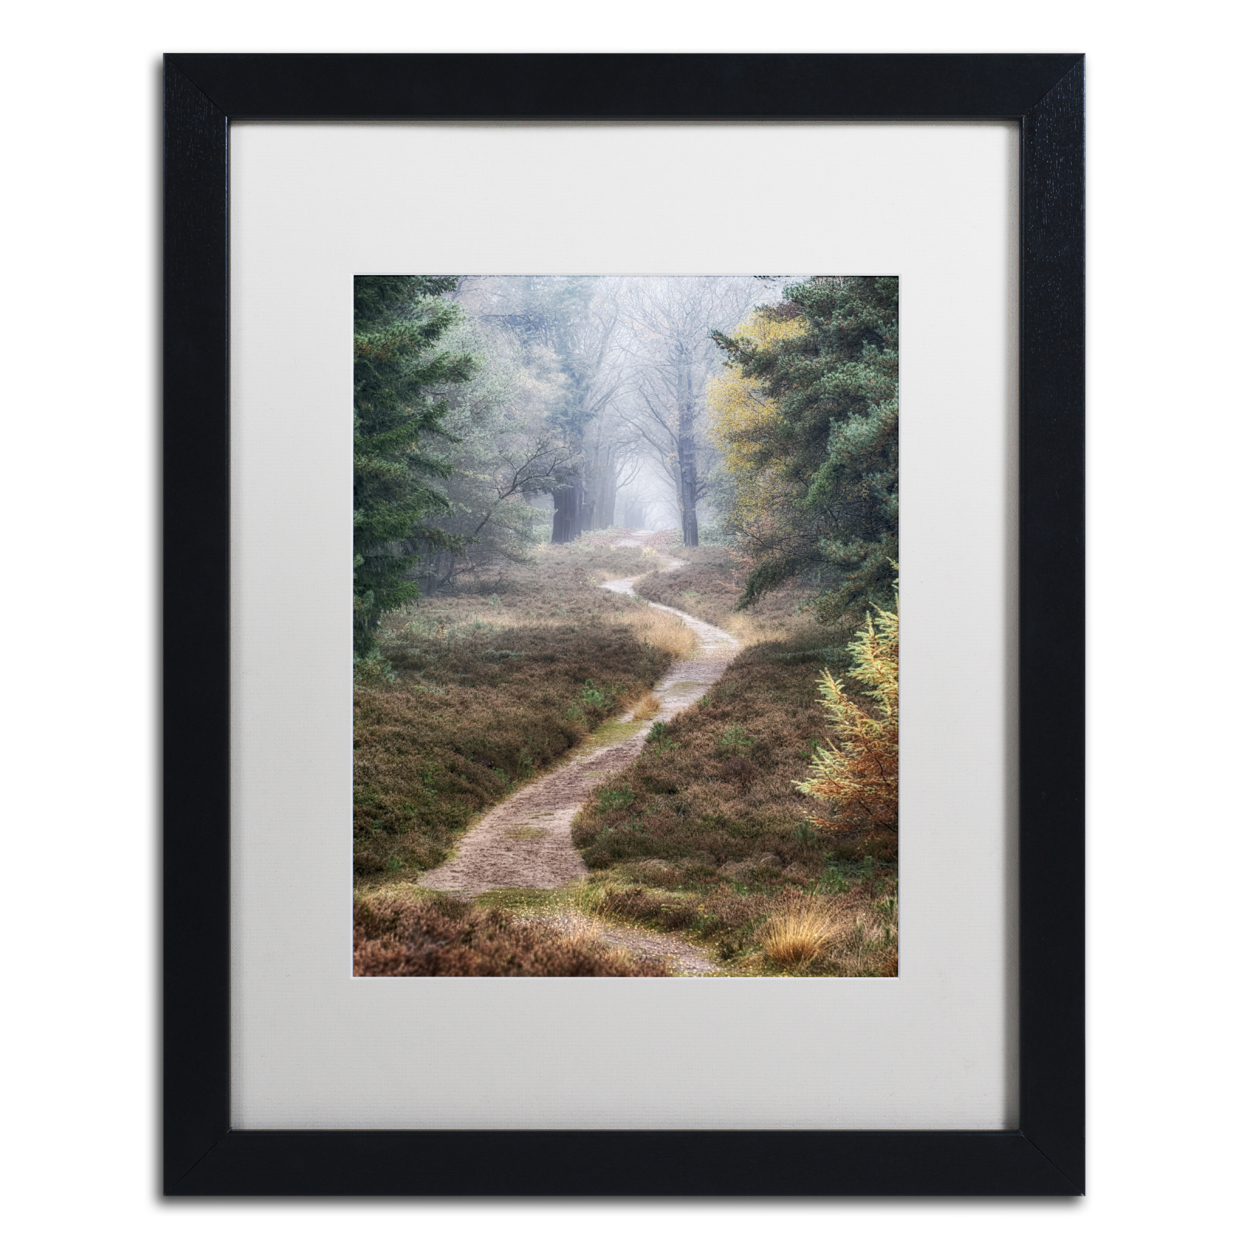 Cora Niele 'Hiking Trail' Black Wooden Framed Art 18 X 22 Inches